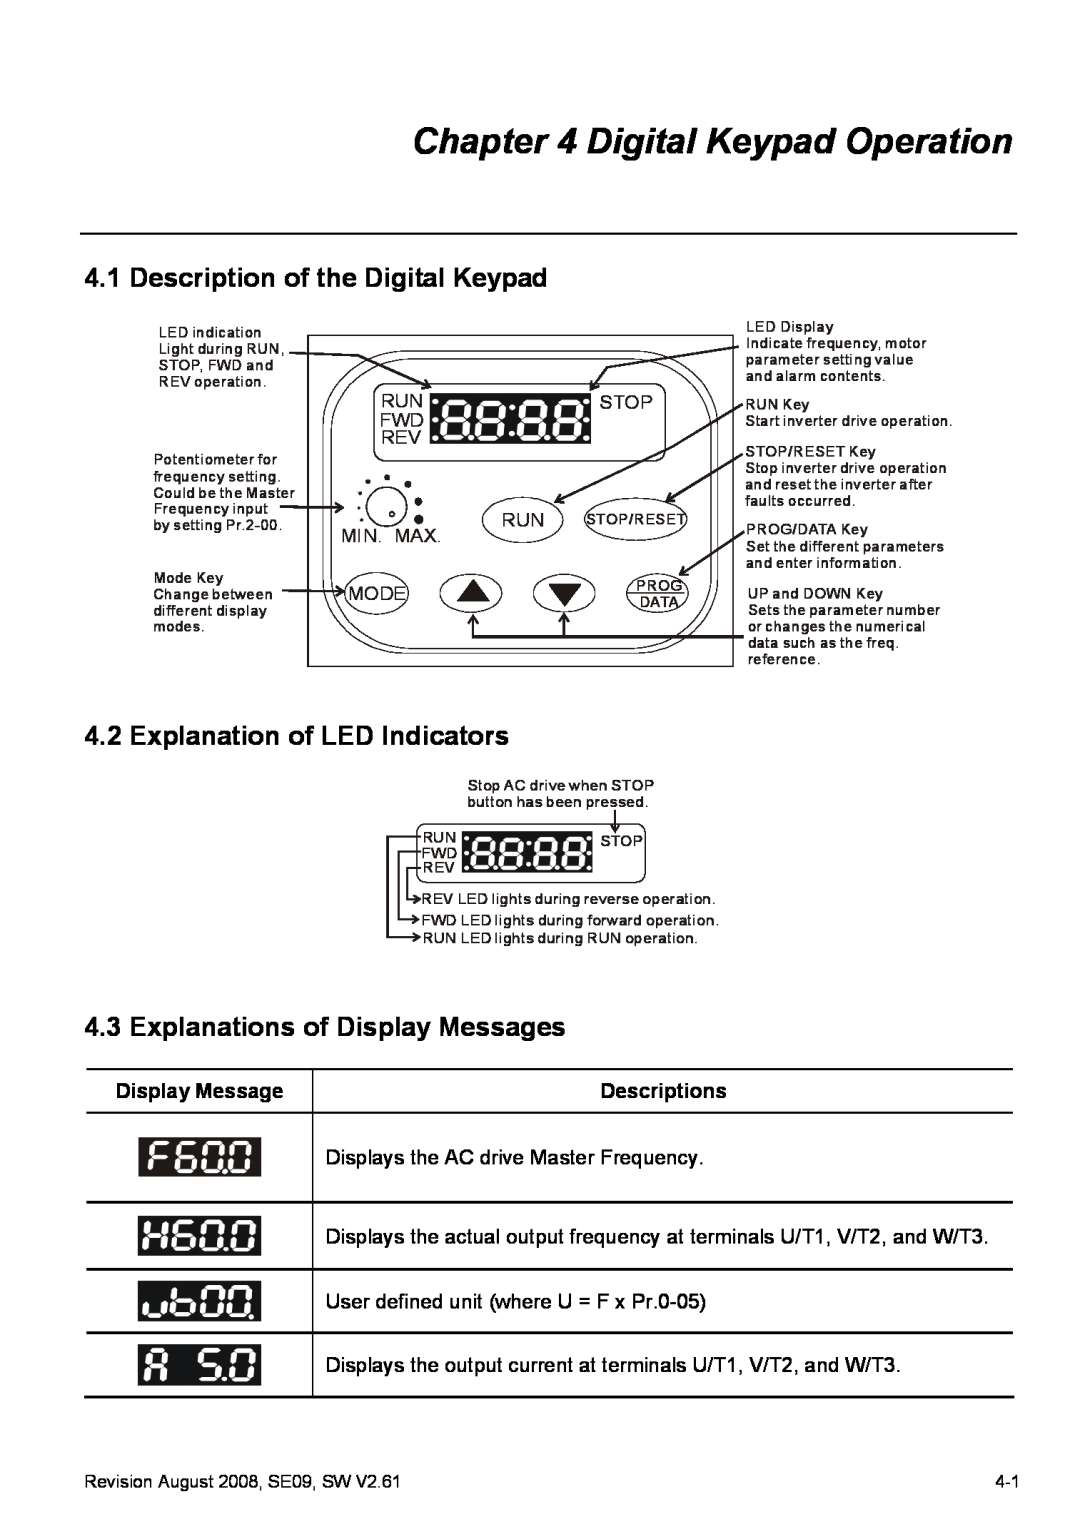 Delta Electronics VFD-S manual Digital Keypad Operation, Description of the Digital Keypad, Explanation of LED Indicators 